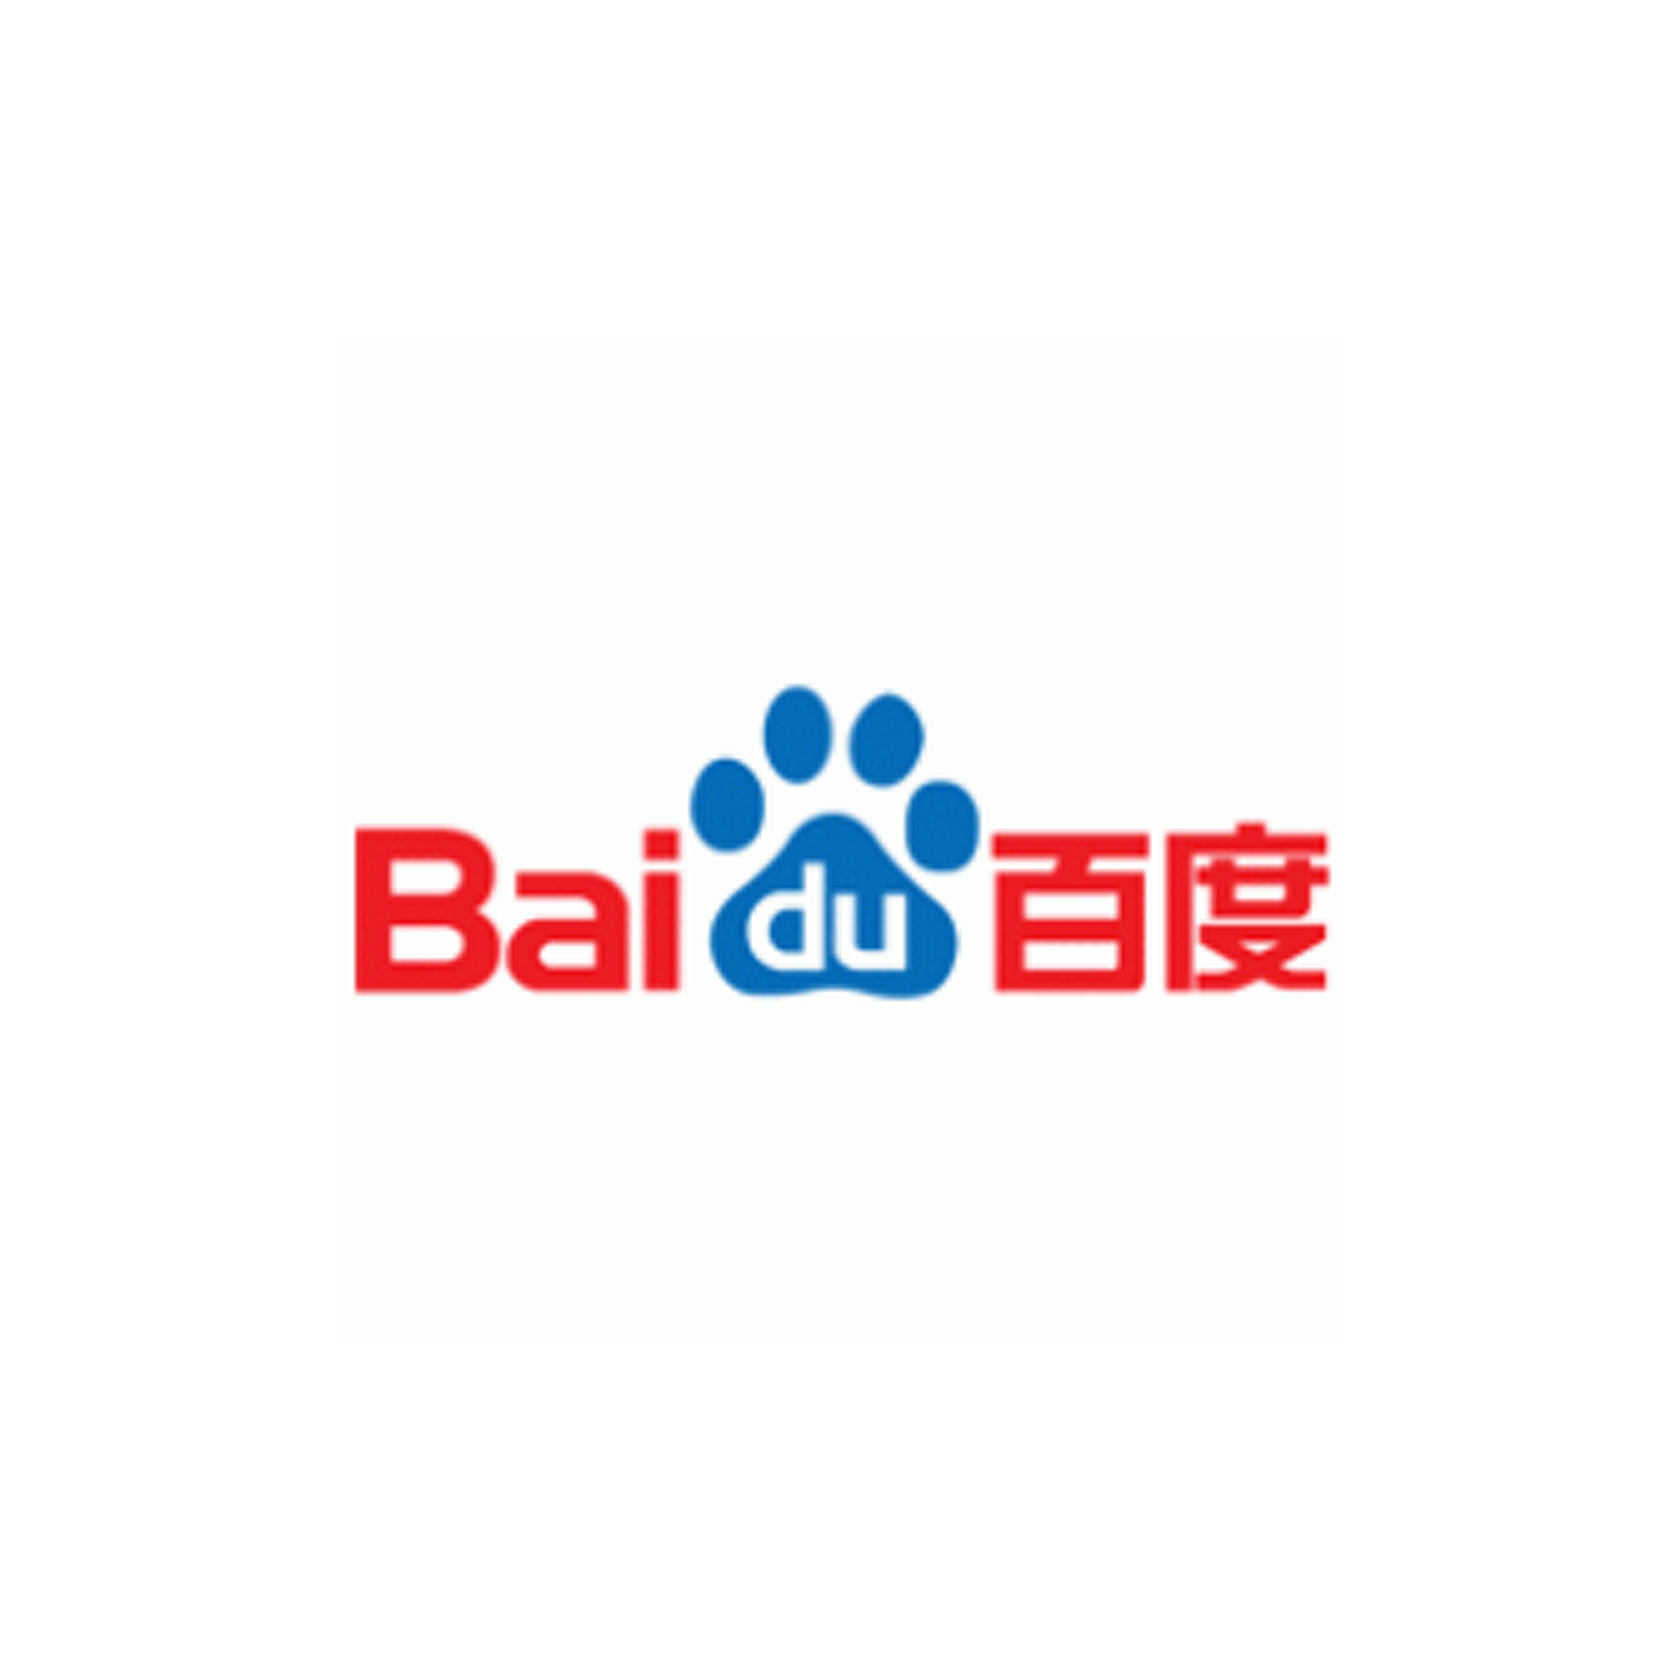 Baidu Logo